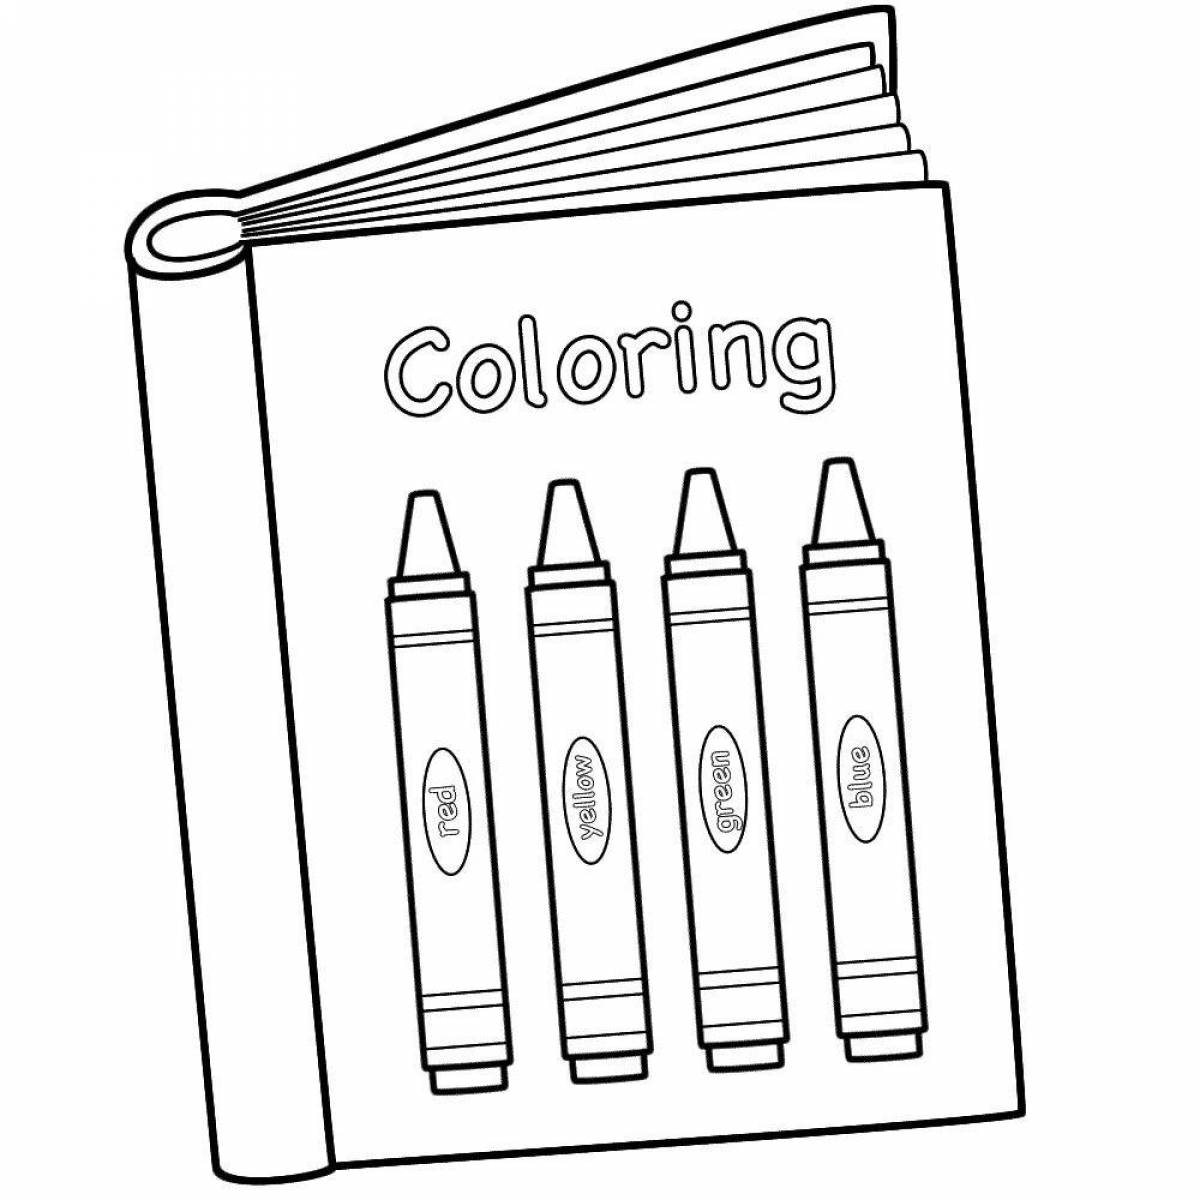 Coloring book #12